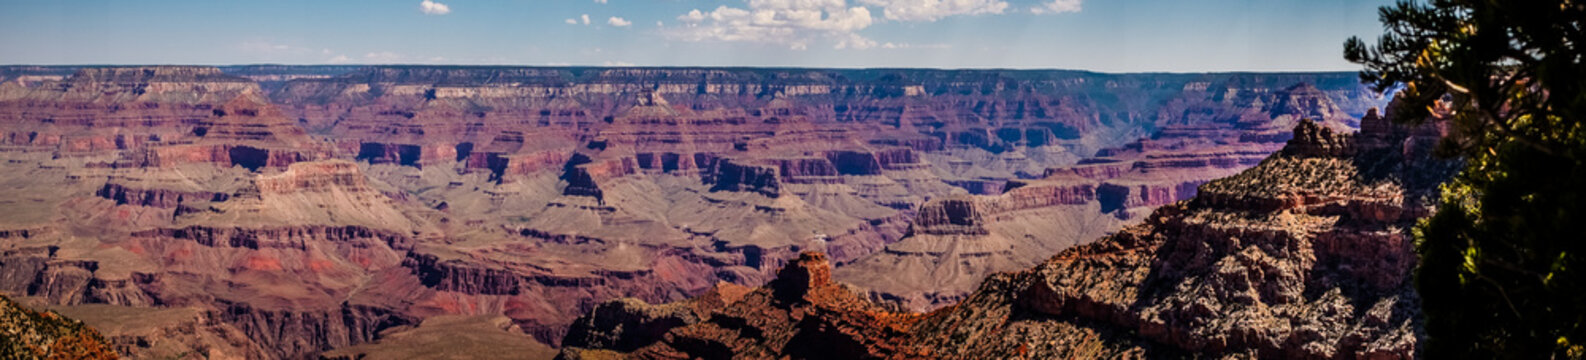 Grand Canyon National Park, Arizona, USA. Deep picturesque gorge